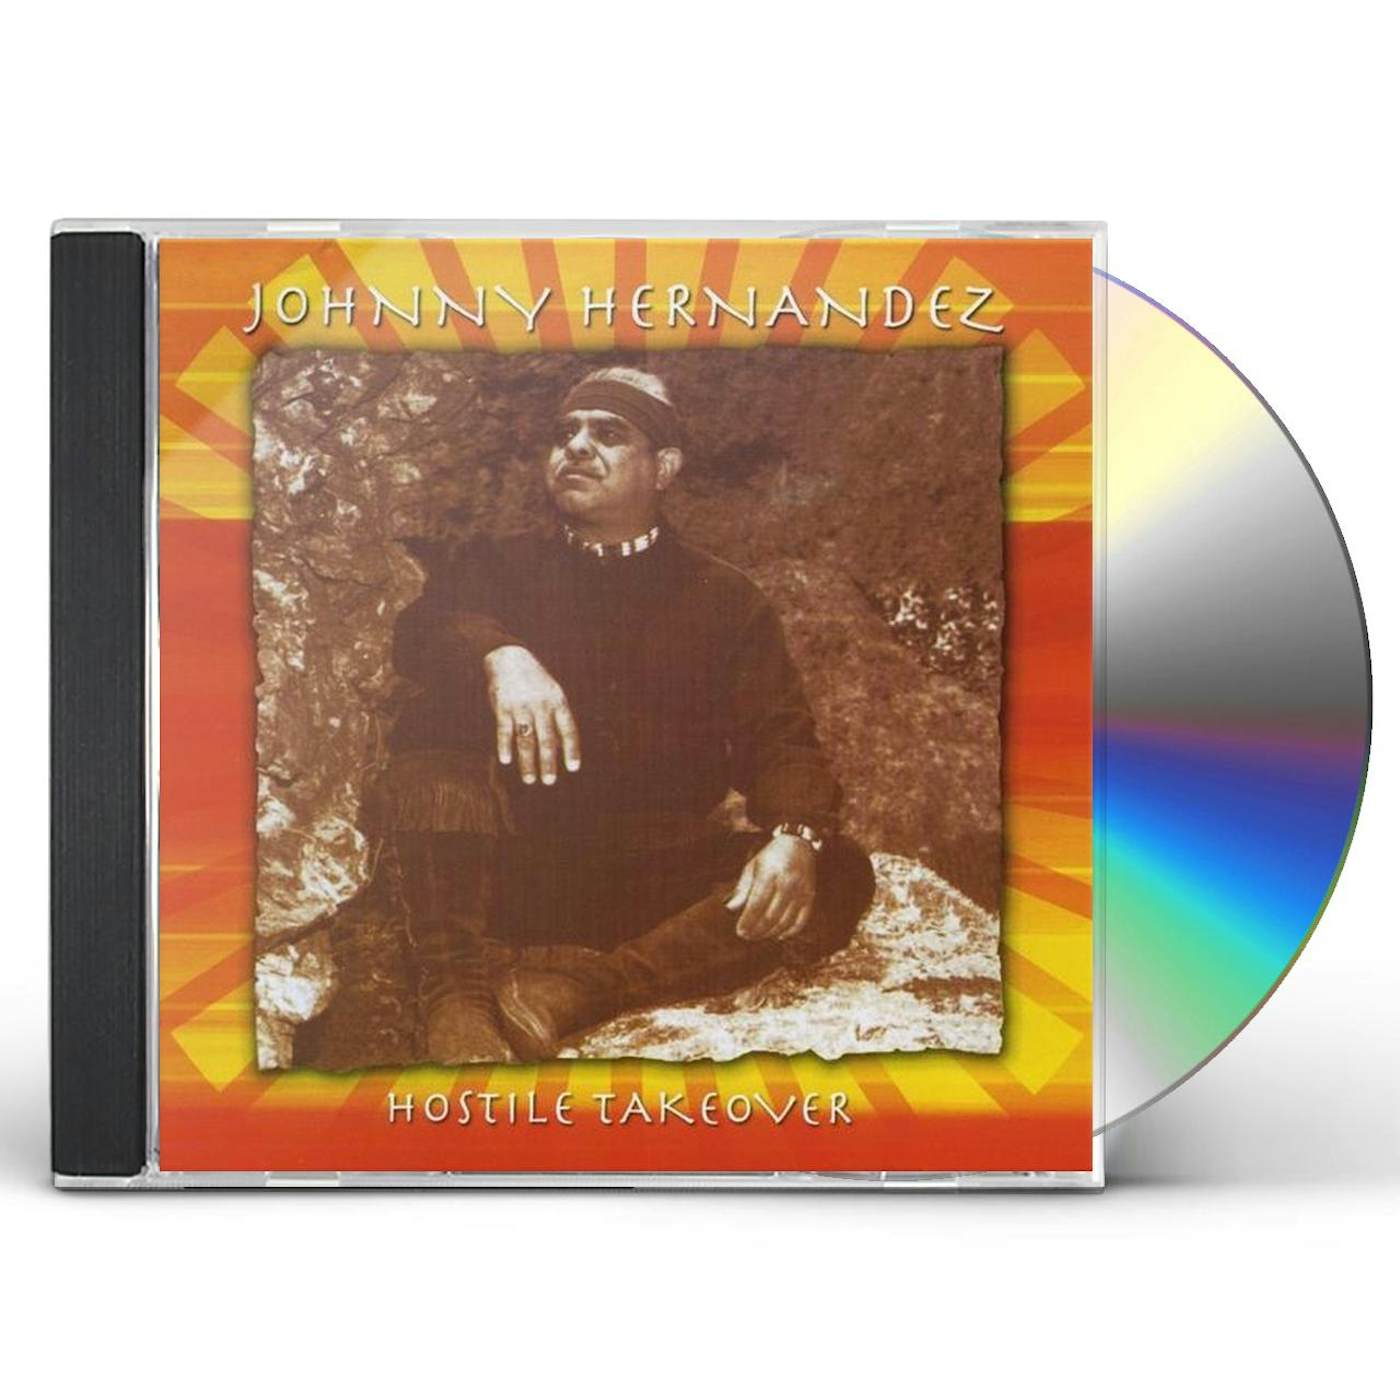 Johnny Hernandez HOSTILE TAKE OVER CD